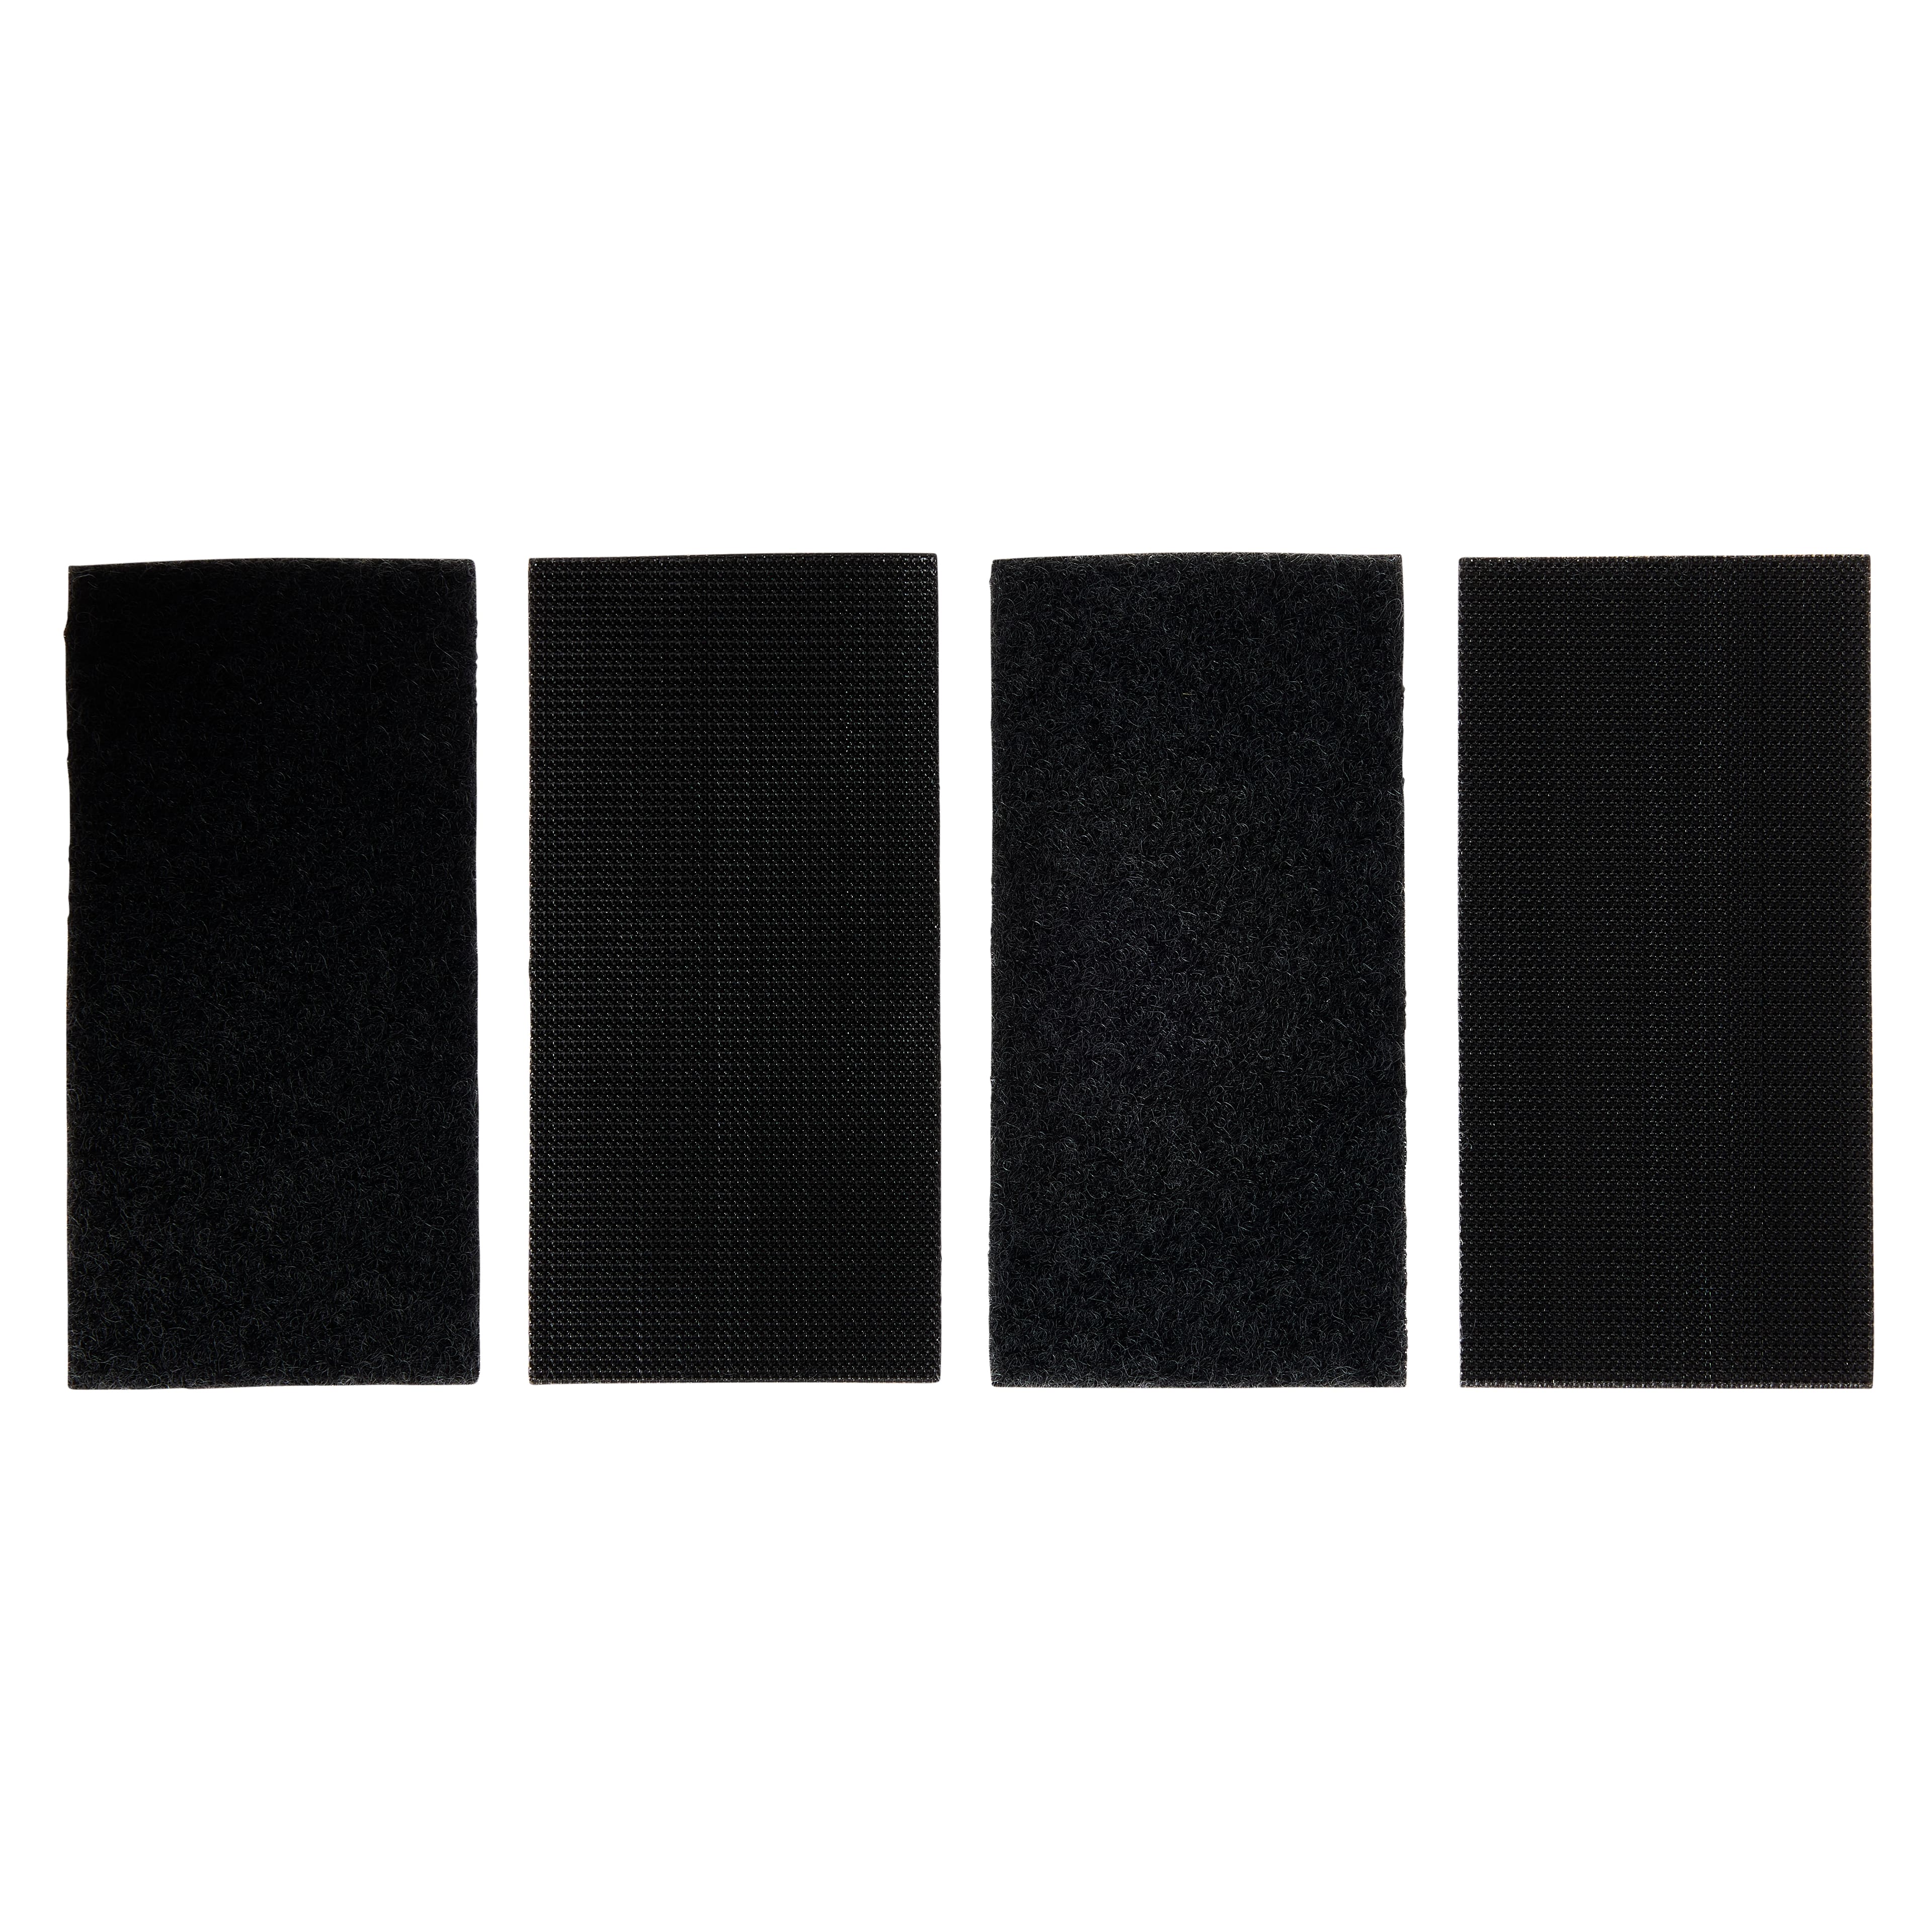 VELCRO® Brand Industrial Strength Black Adhesive Roll, Michaels